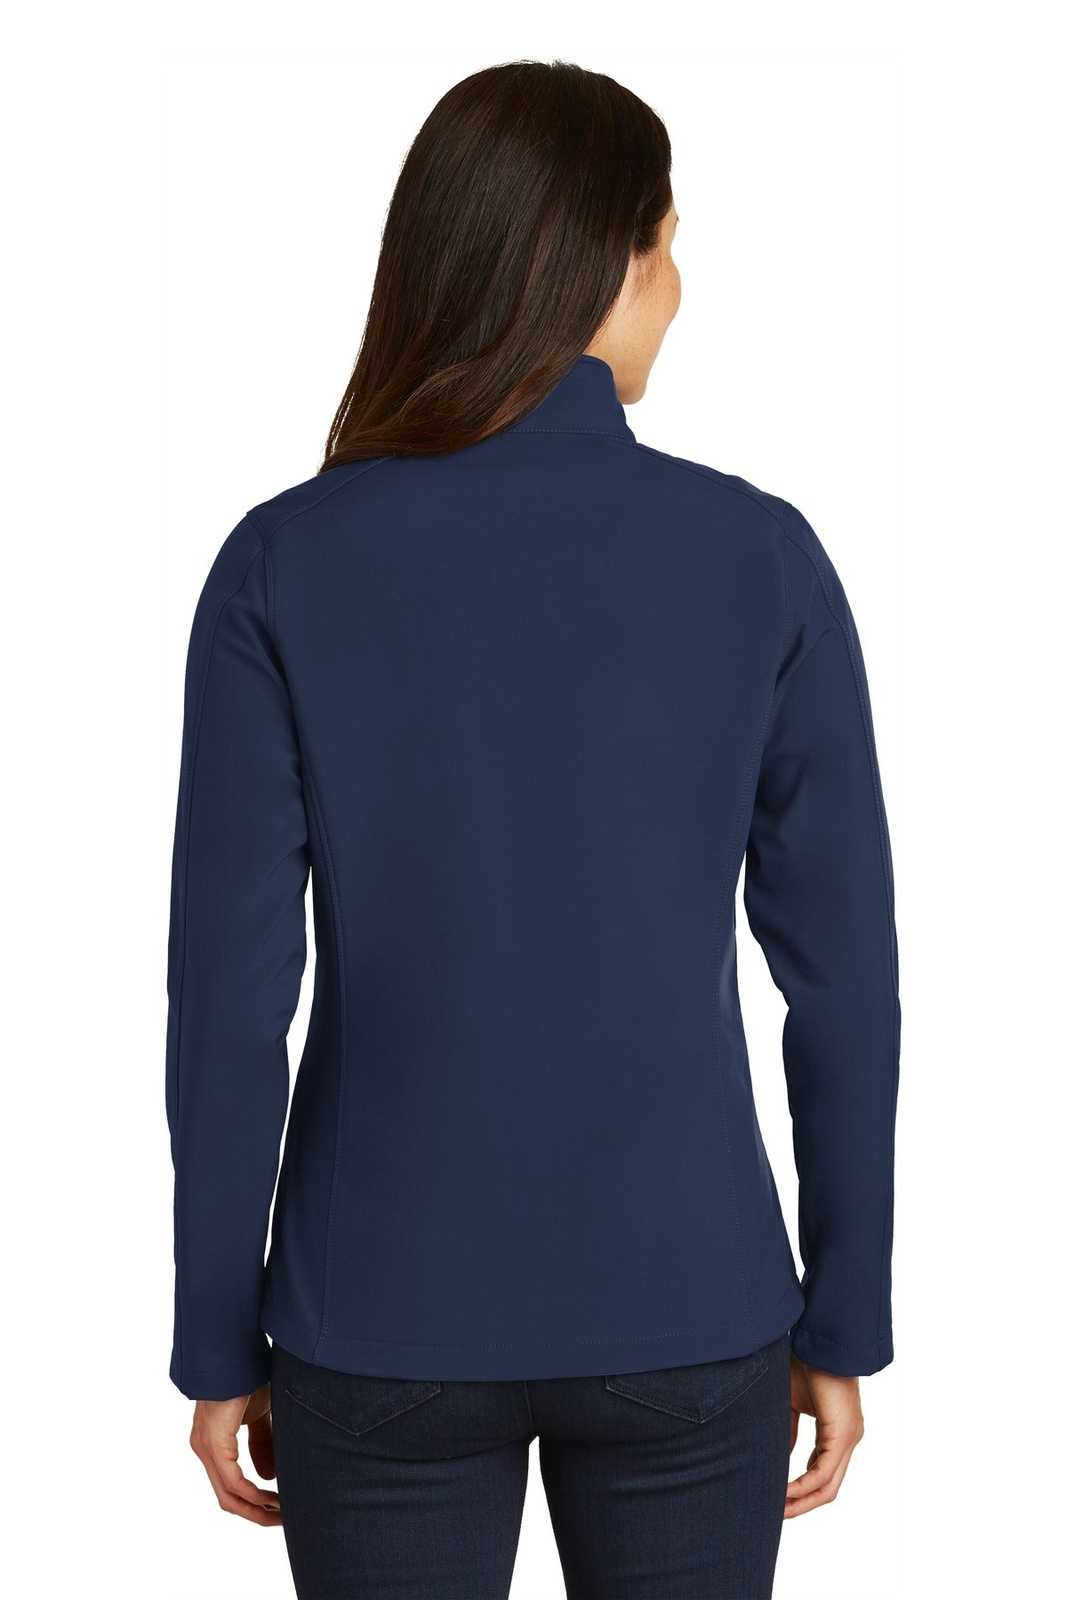 Port Authority L317 Ladies Core Soft Shell Jacket - Dress Blue Navy - HIT a Double - 2